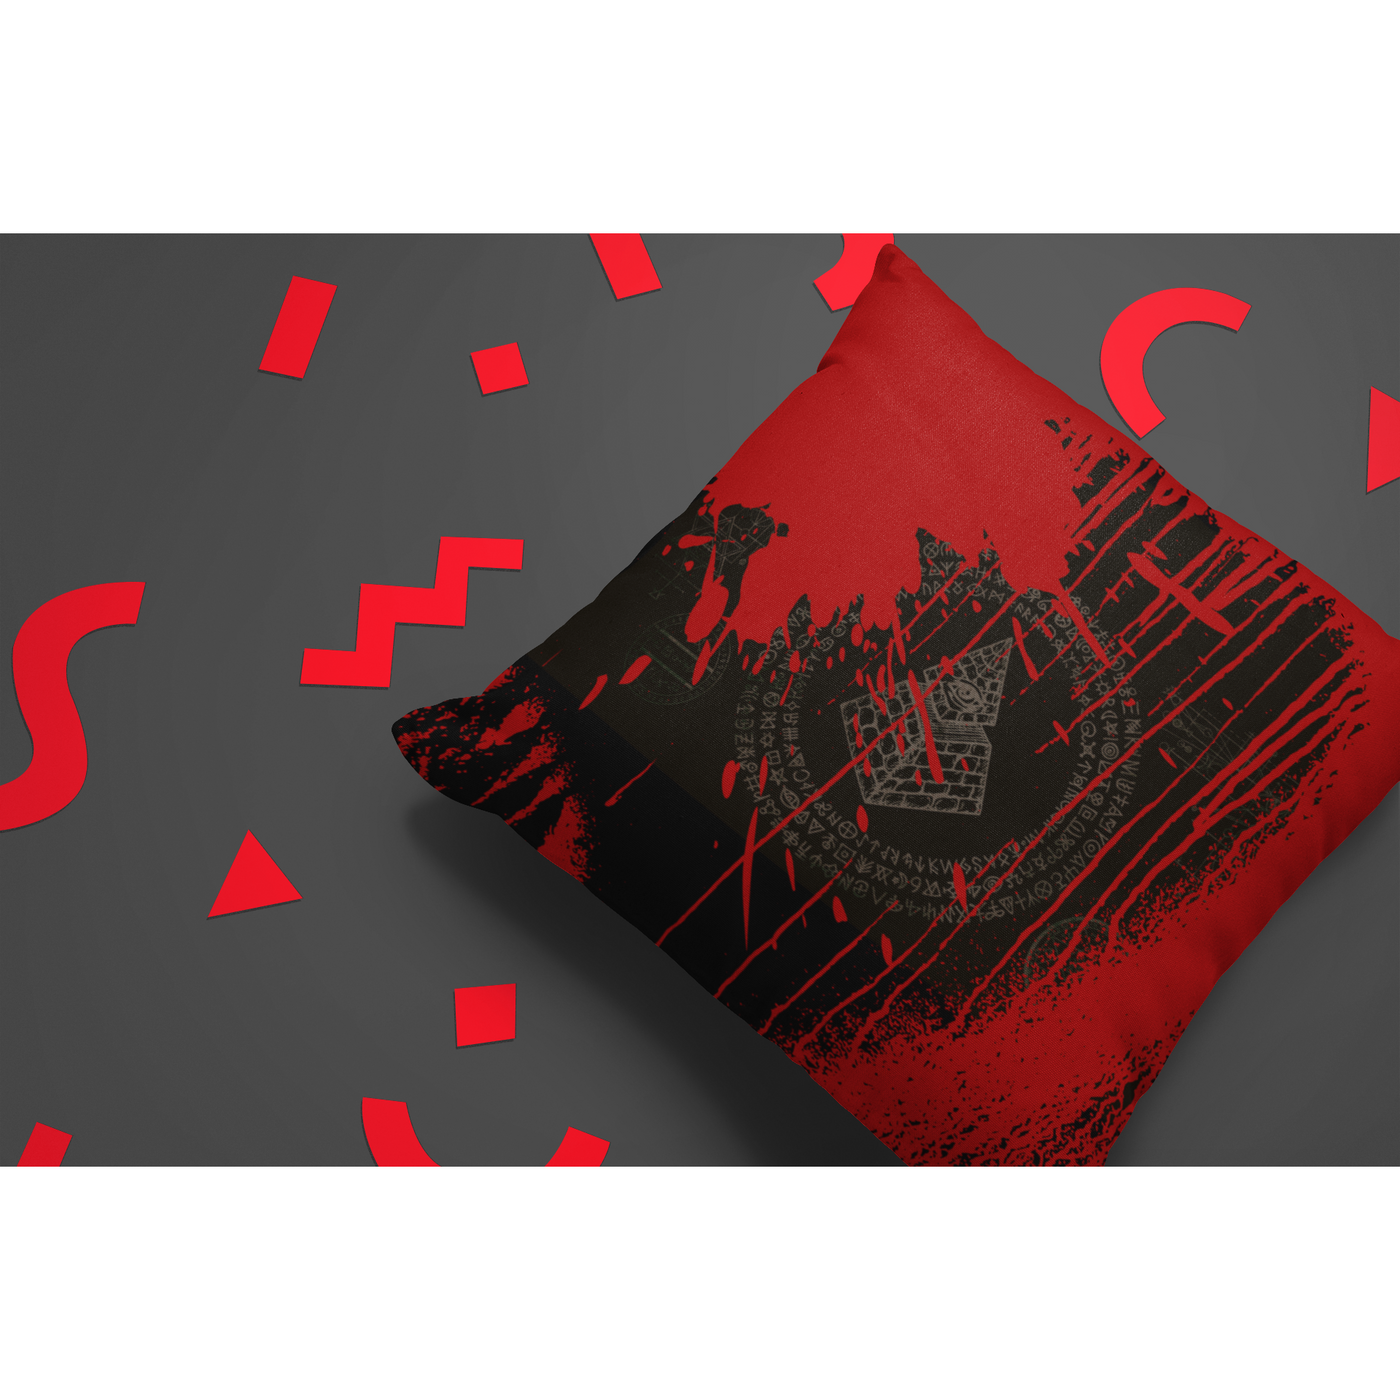 Dark Slate Gray Bloody Esoteric Symbols | Pillow Cover